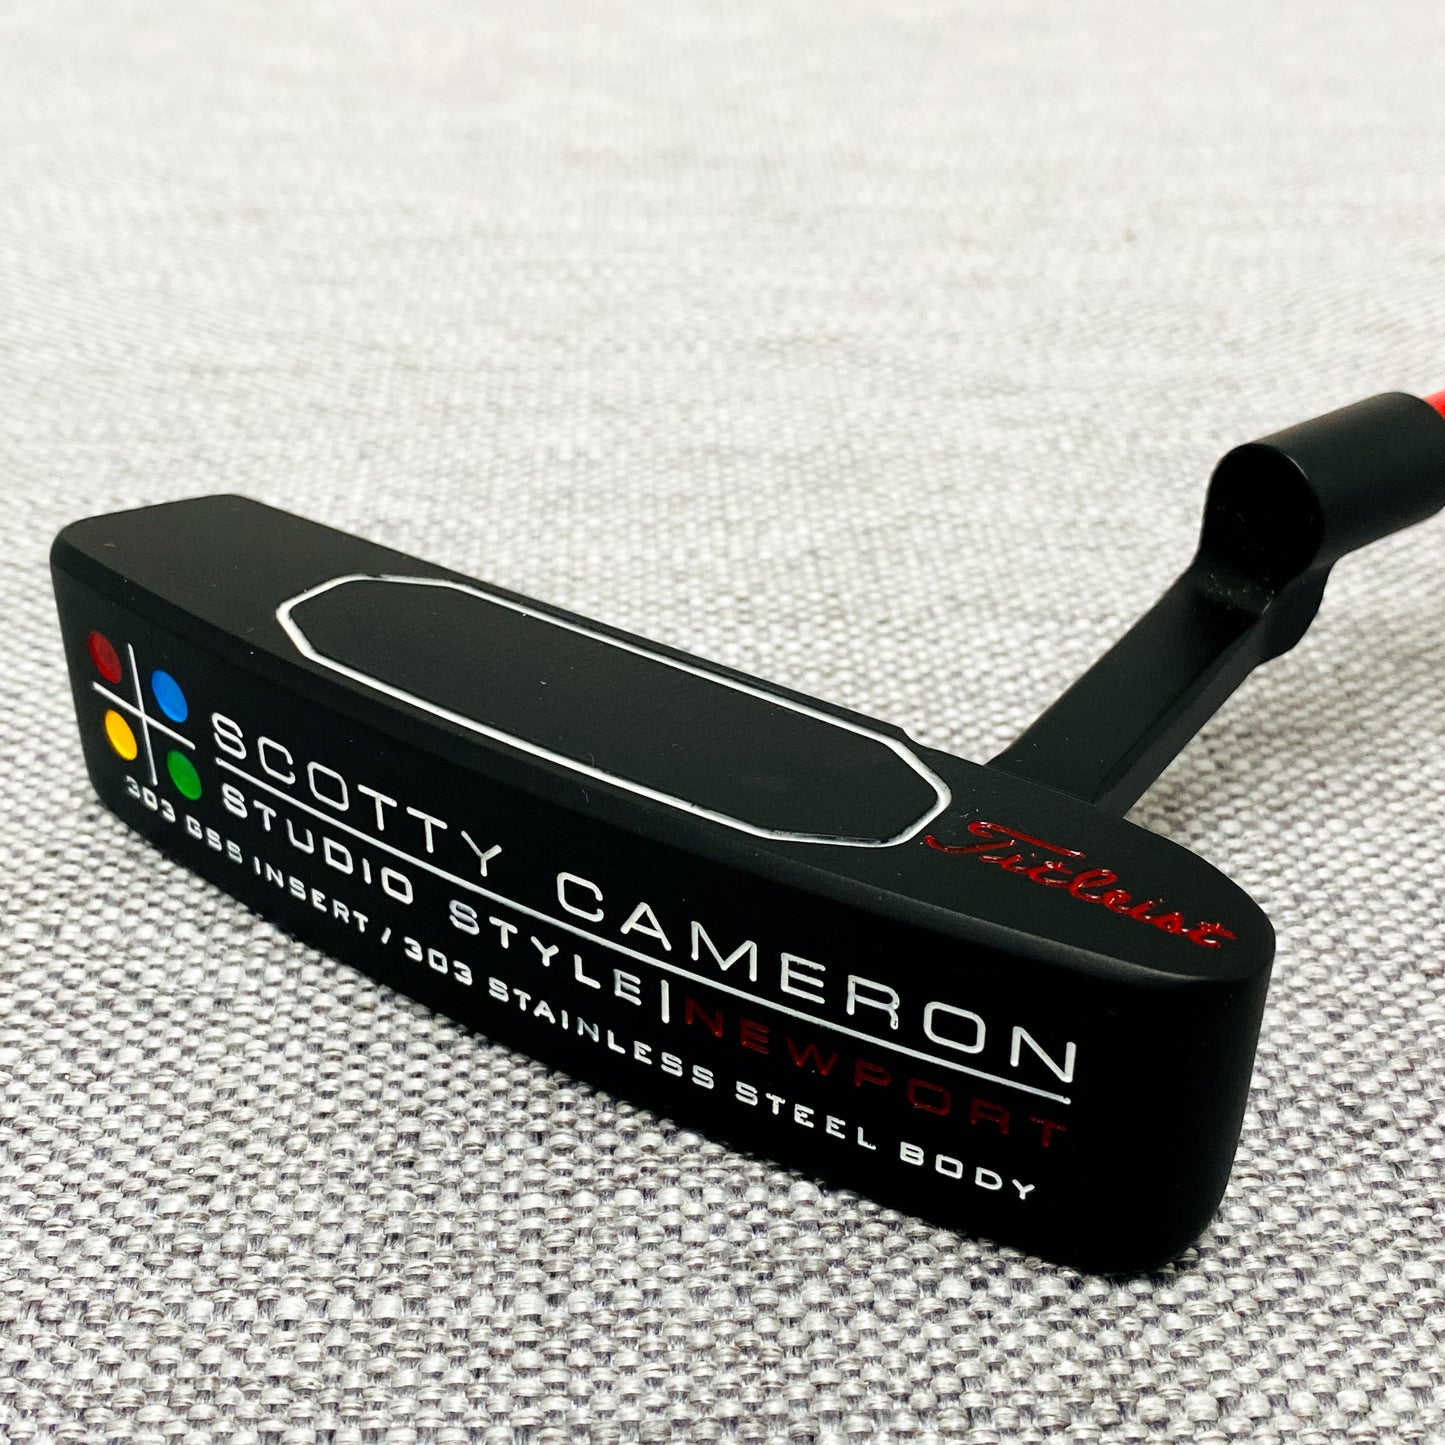 Scotty Cameron 2007 Studio Style Newport Custom Putter. Cerakote Black finish, KBS GPS Graphite shaft - As New